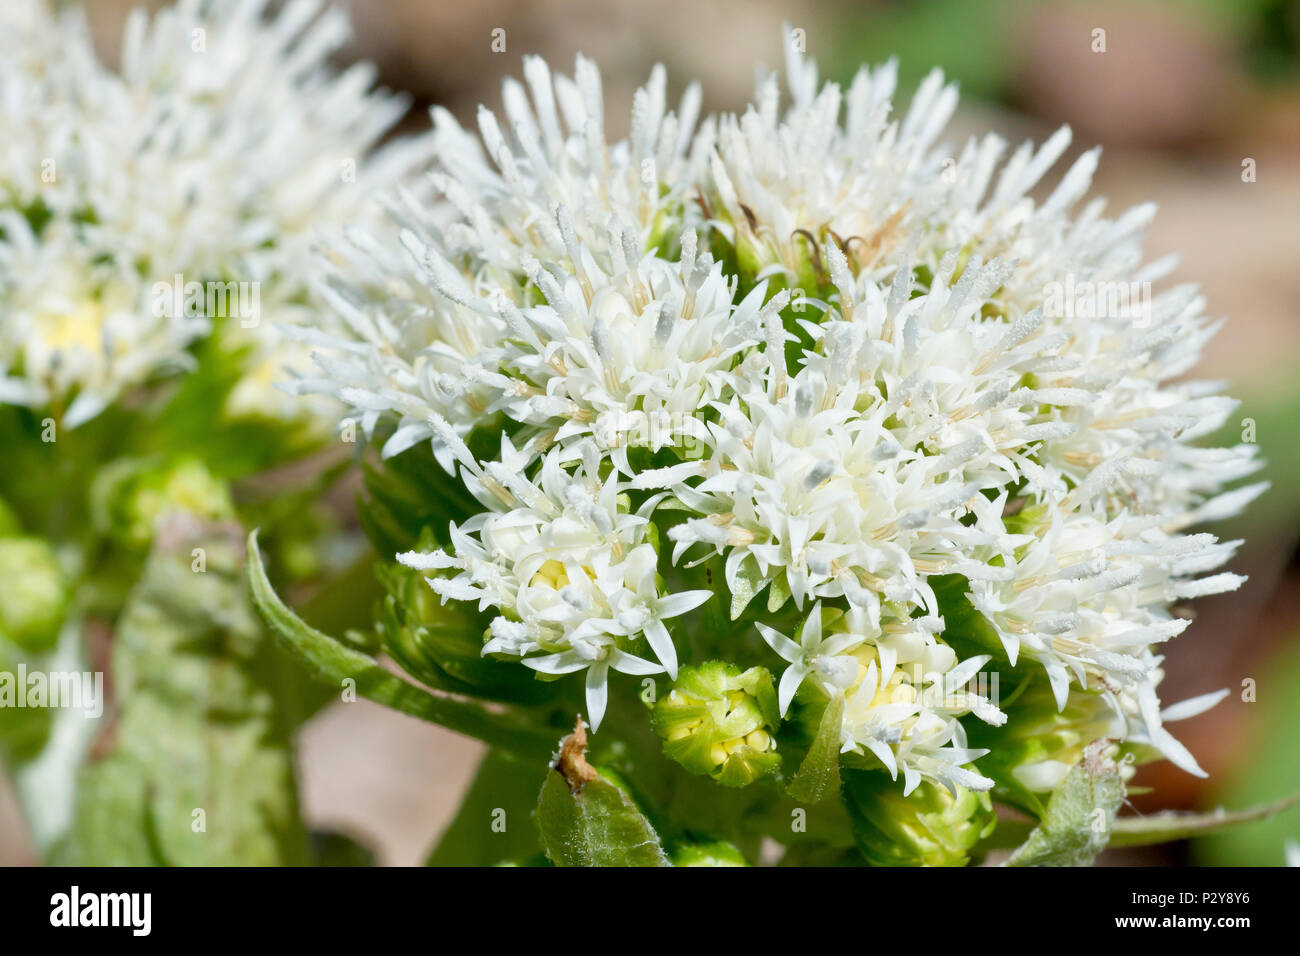 Petasite bianca (Petasites alba), close up compatta testa fiore del fiore maschile. Foto Stock